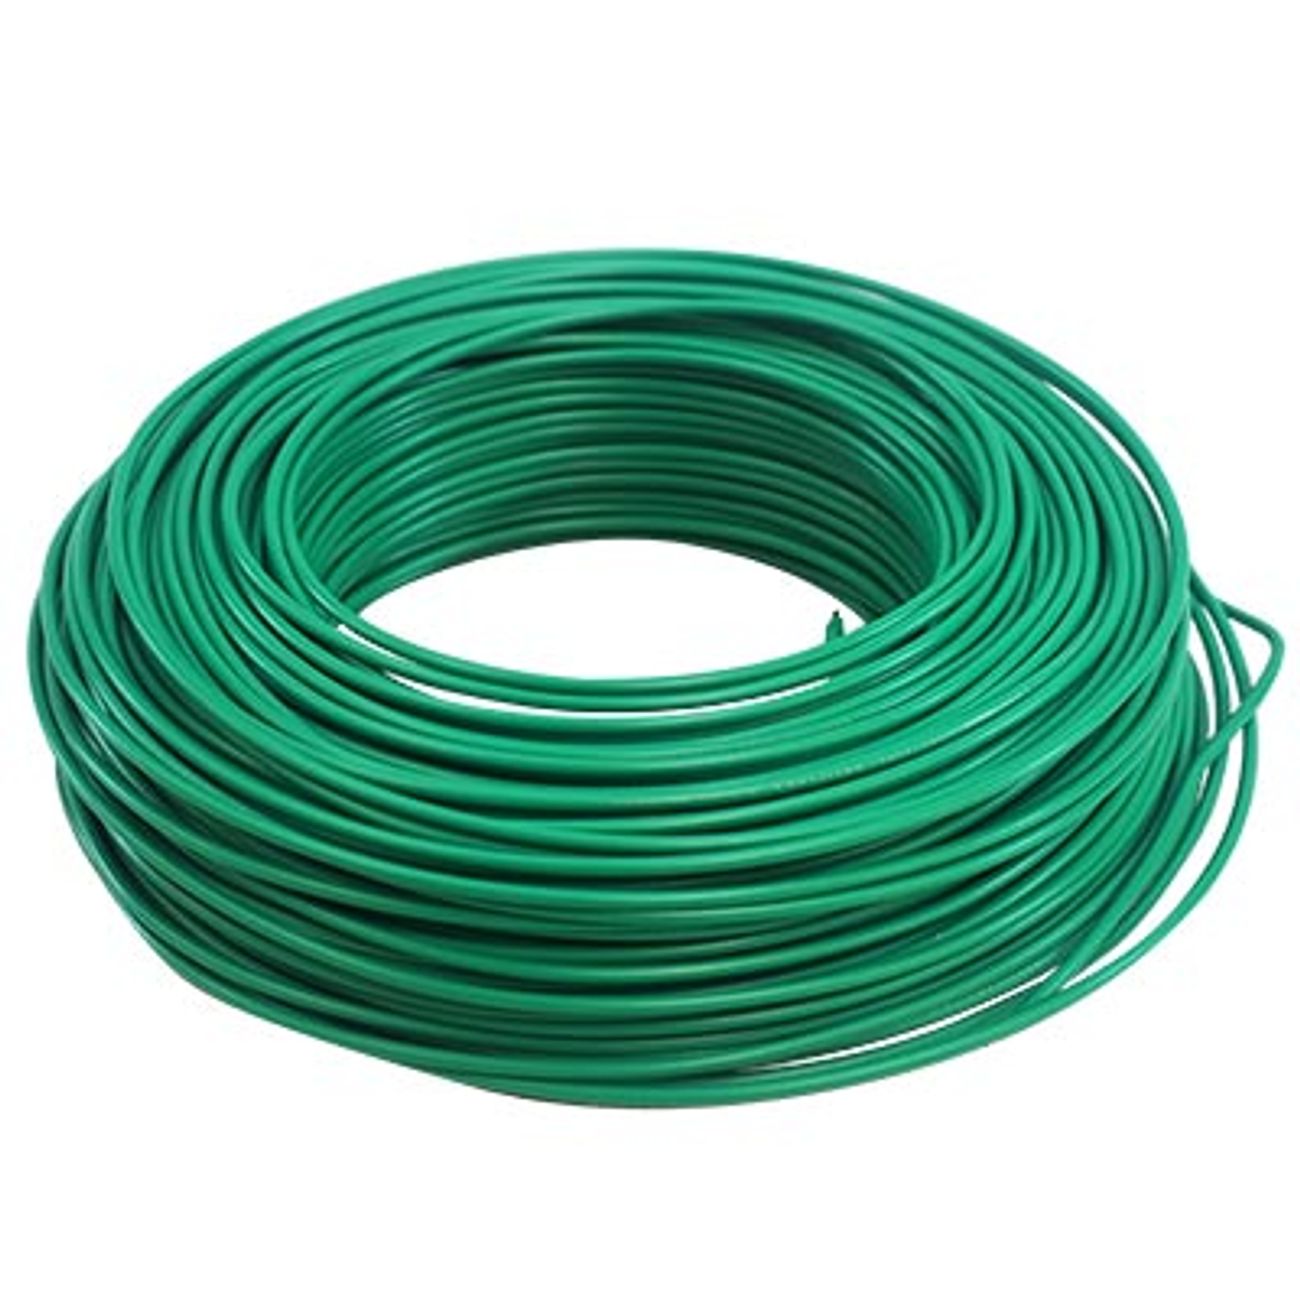 Cable Thw Iusa Calibre 10 100m Verde Iusa10v Ferreteriabehza 9372